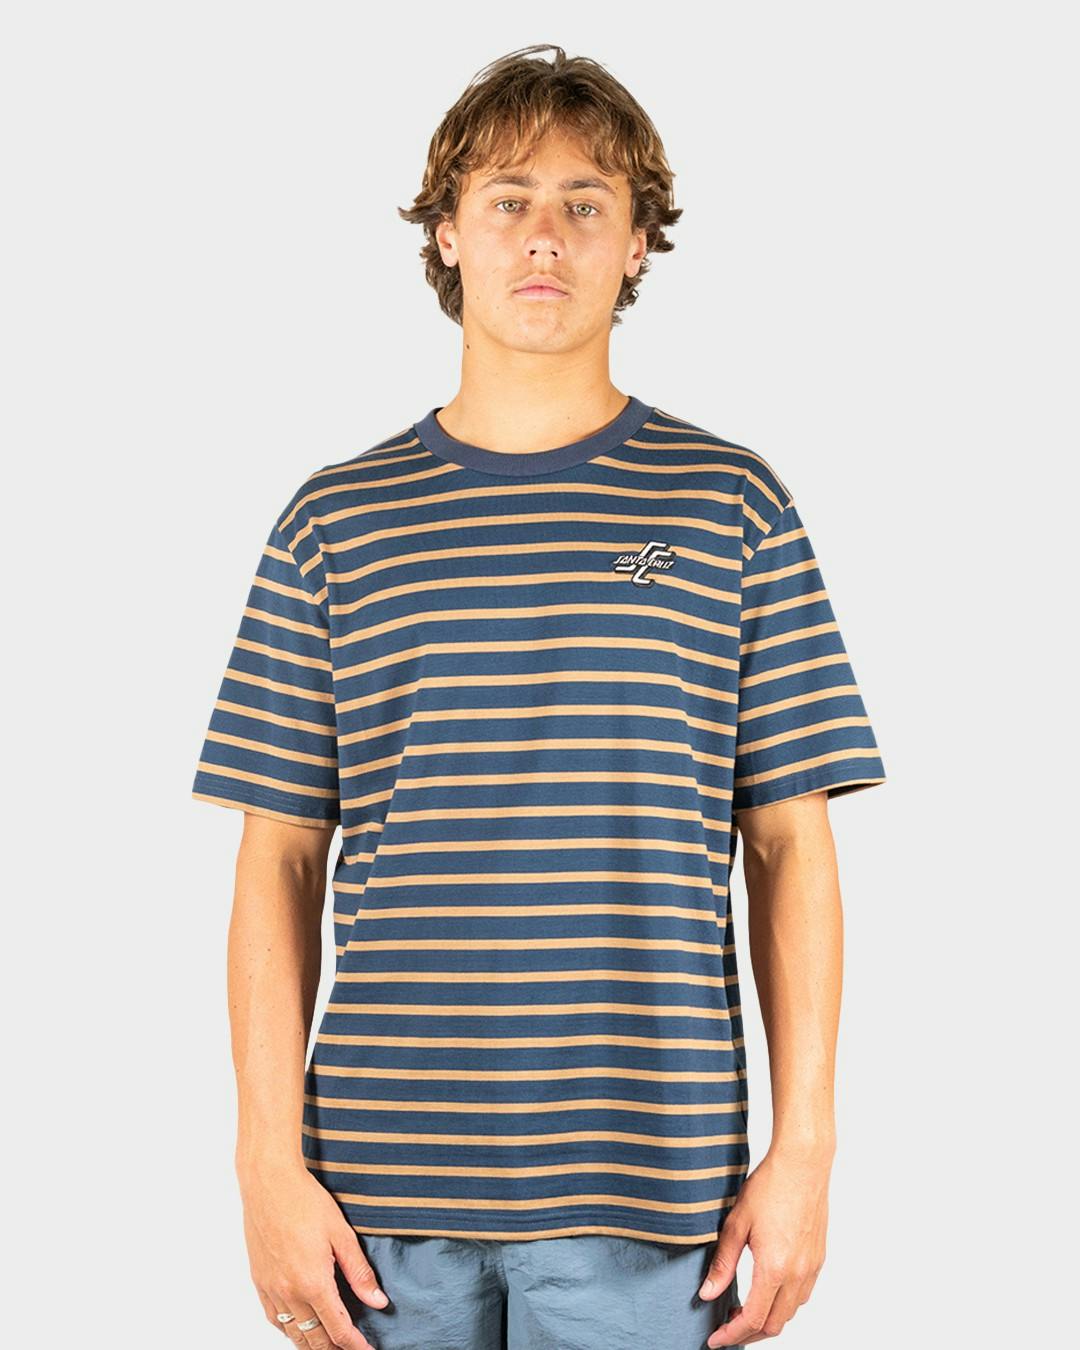 Nike SB Navy Stripe Yarn Dye T-Shirt